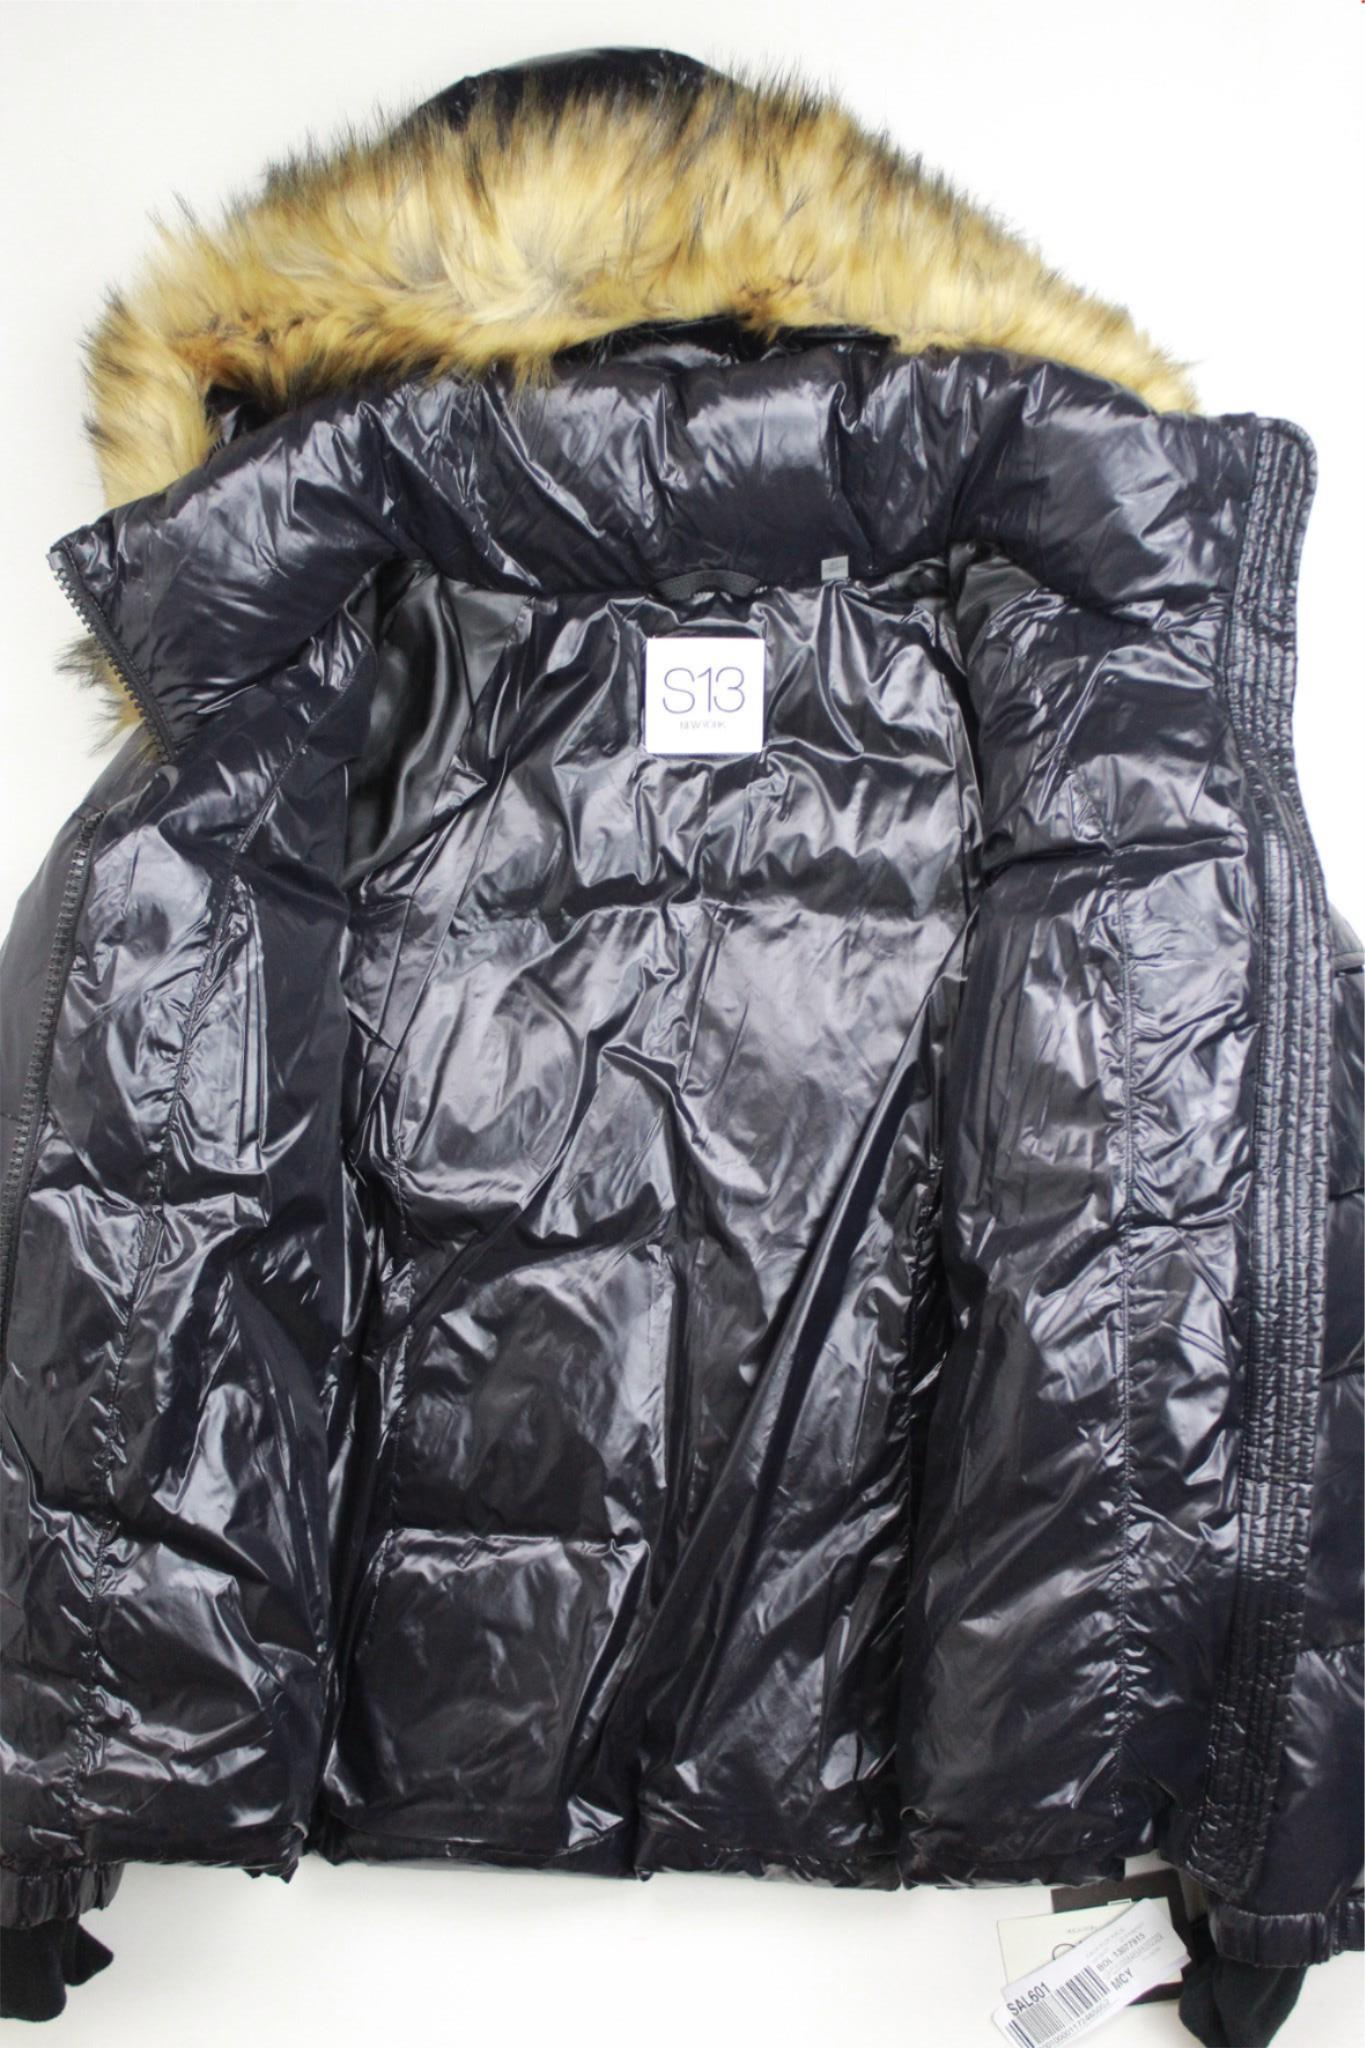 S13 Womens Allie Faux-Fur-Trim Hooded Puffer Coat Small Black